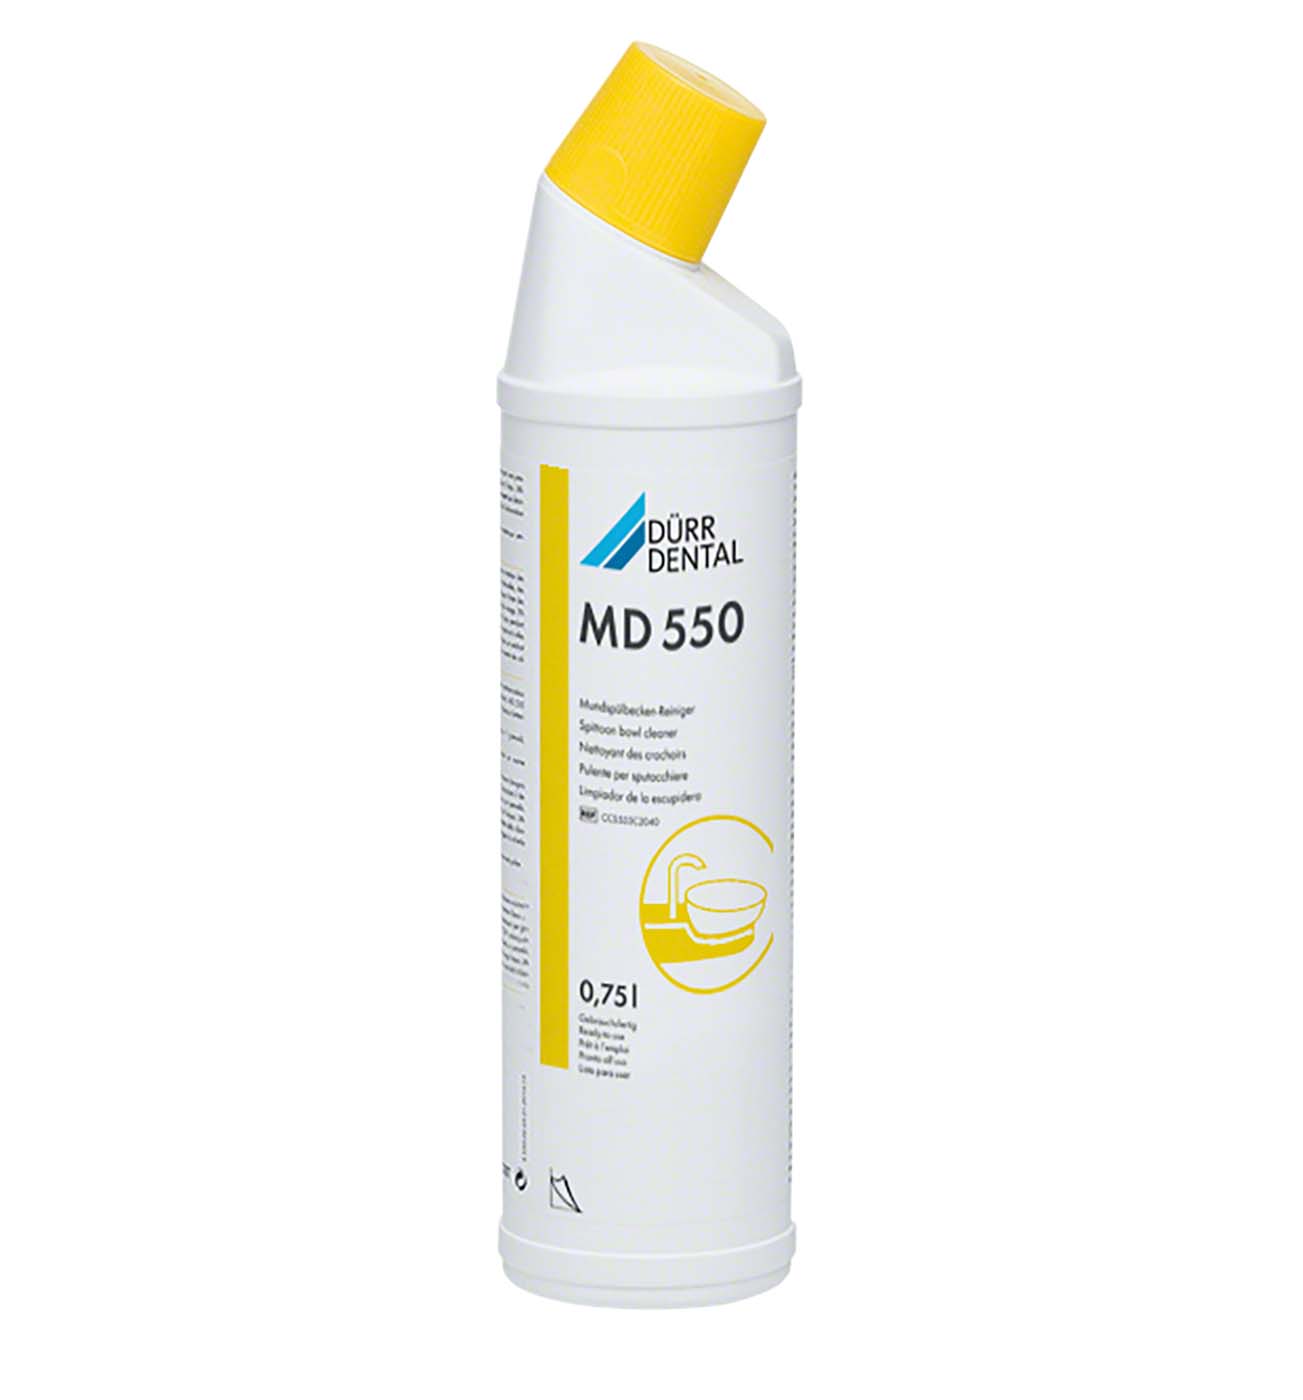 MD 550 Mundspülbecken-Reiniger Dürr Dental